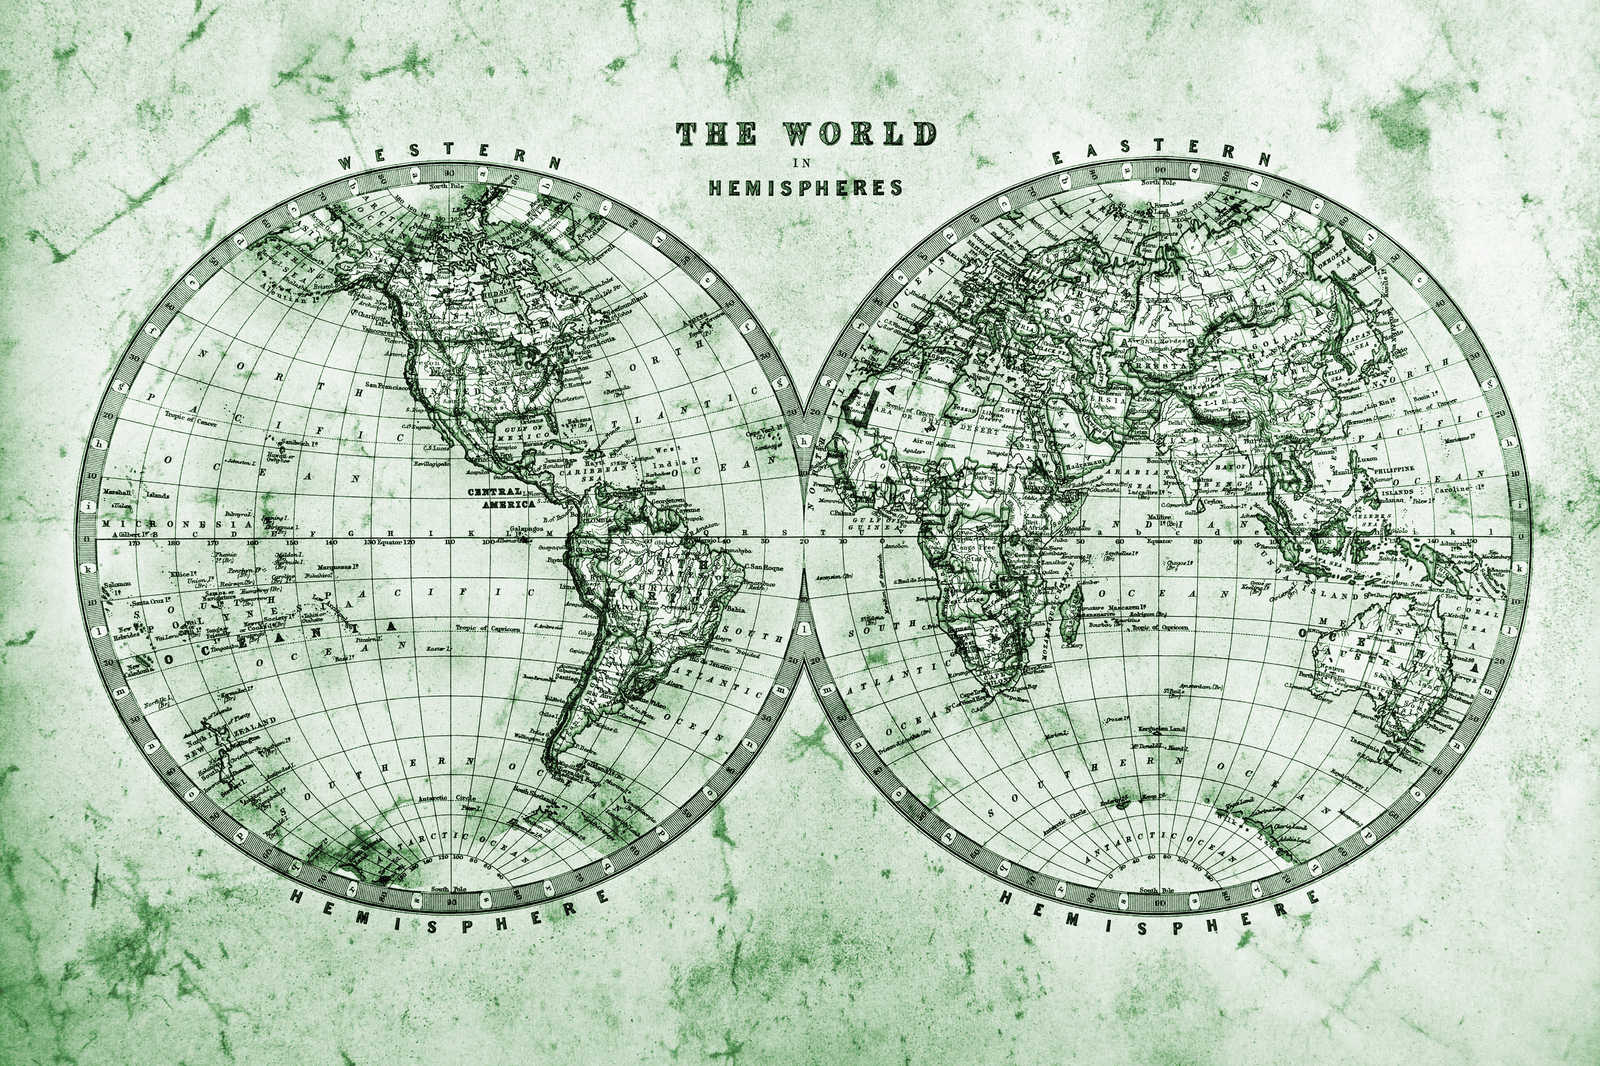             Lienzo con mapamundi vintage en hemisferios | verde, gris, blanco - 0,90 m x 0,60 m
        